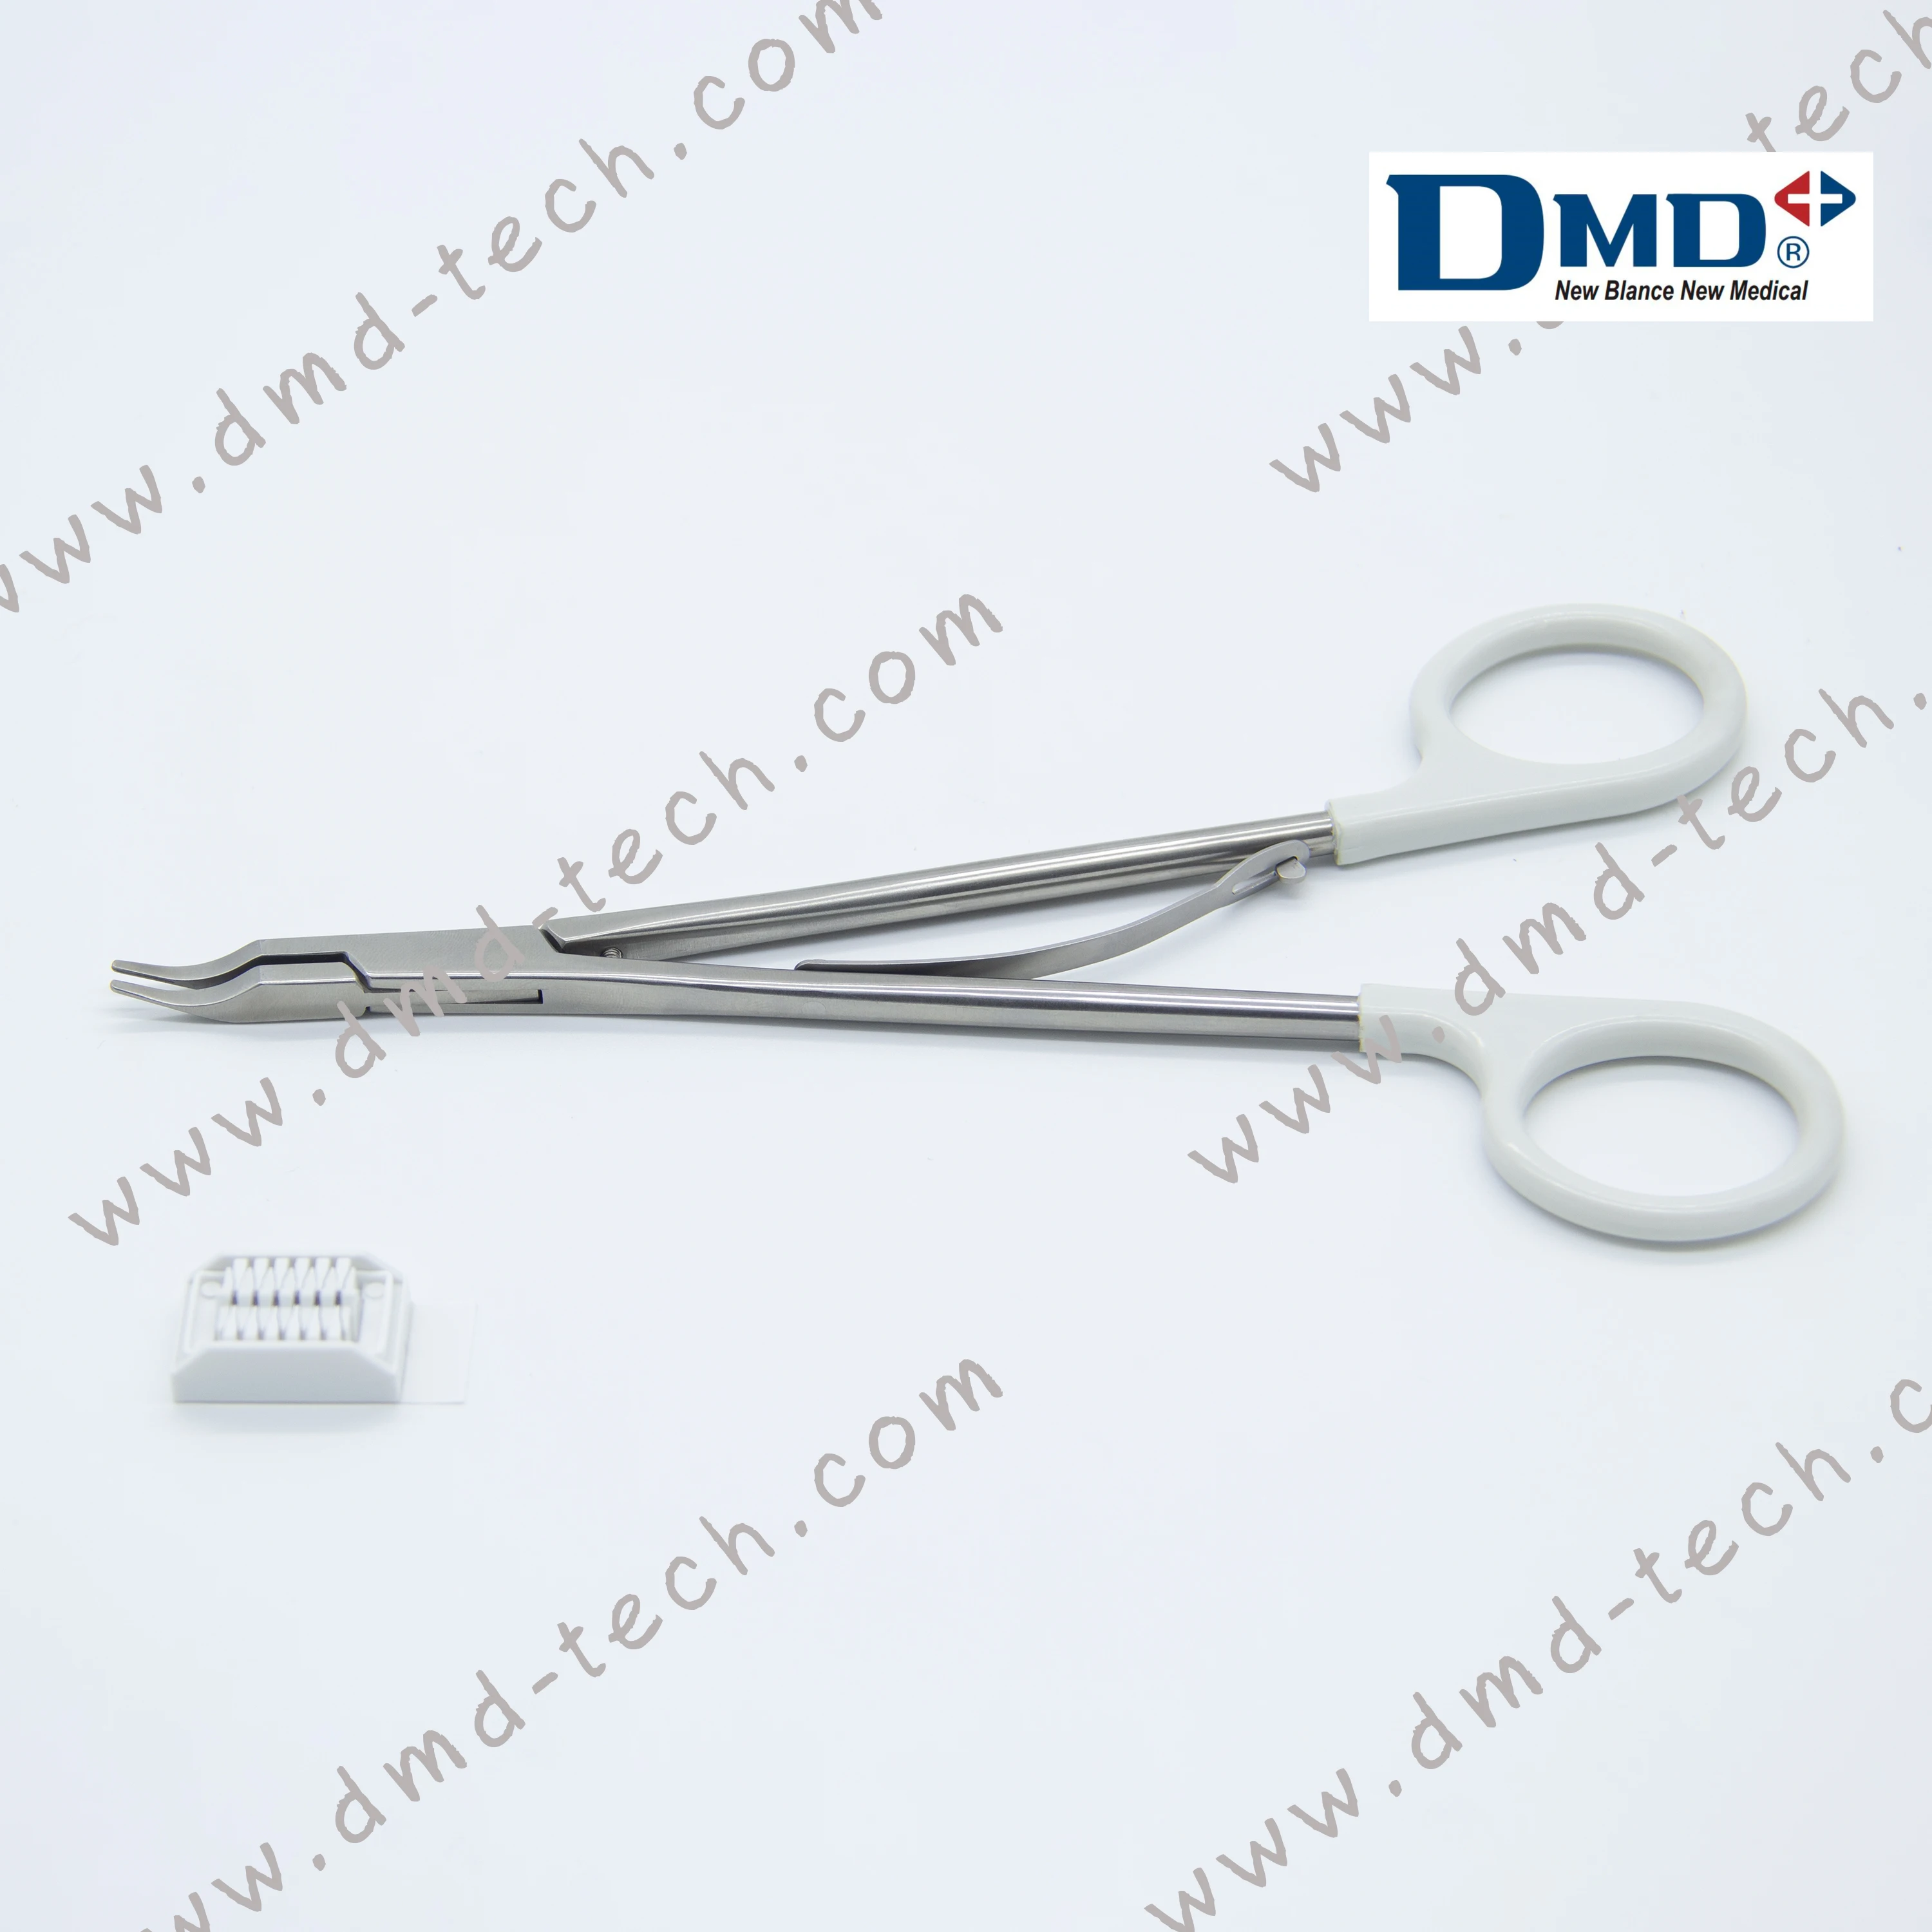 

reusable surgical titanium ligation clips appliers for vascular surgery micro